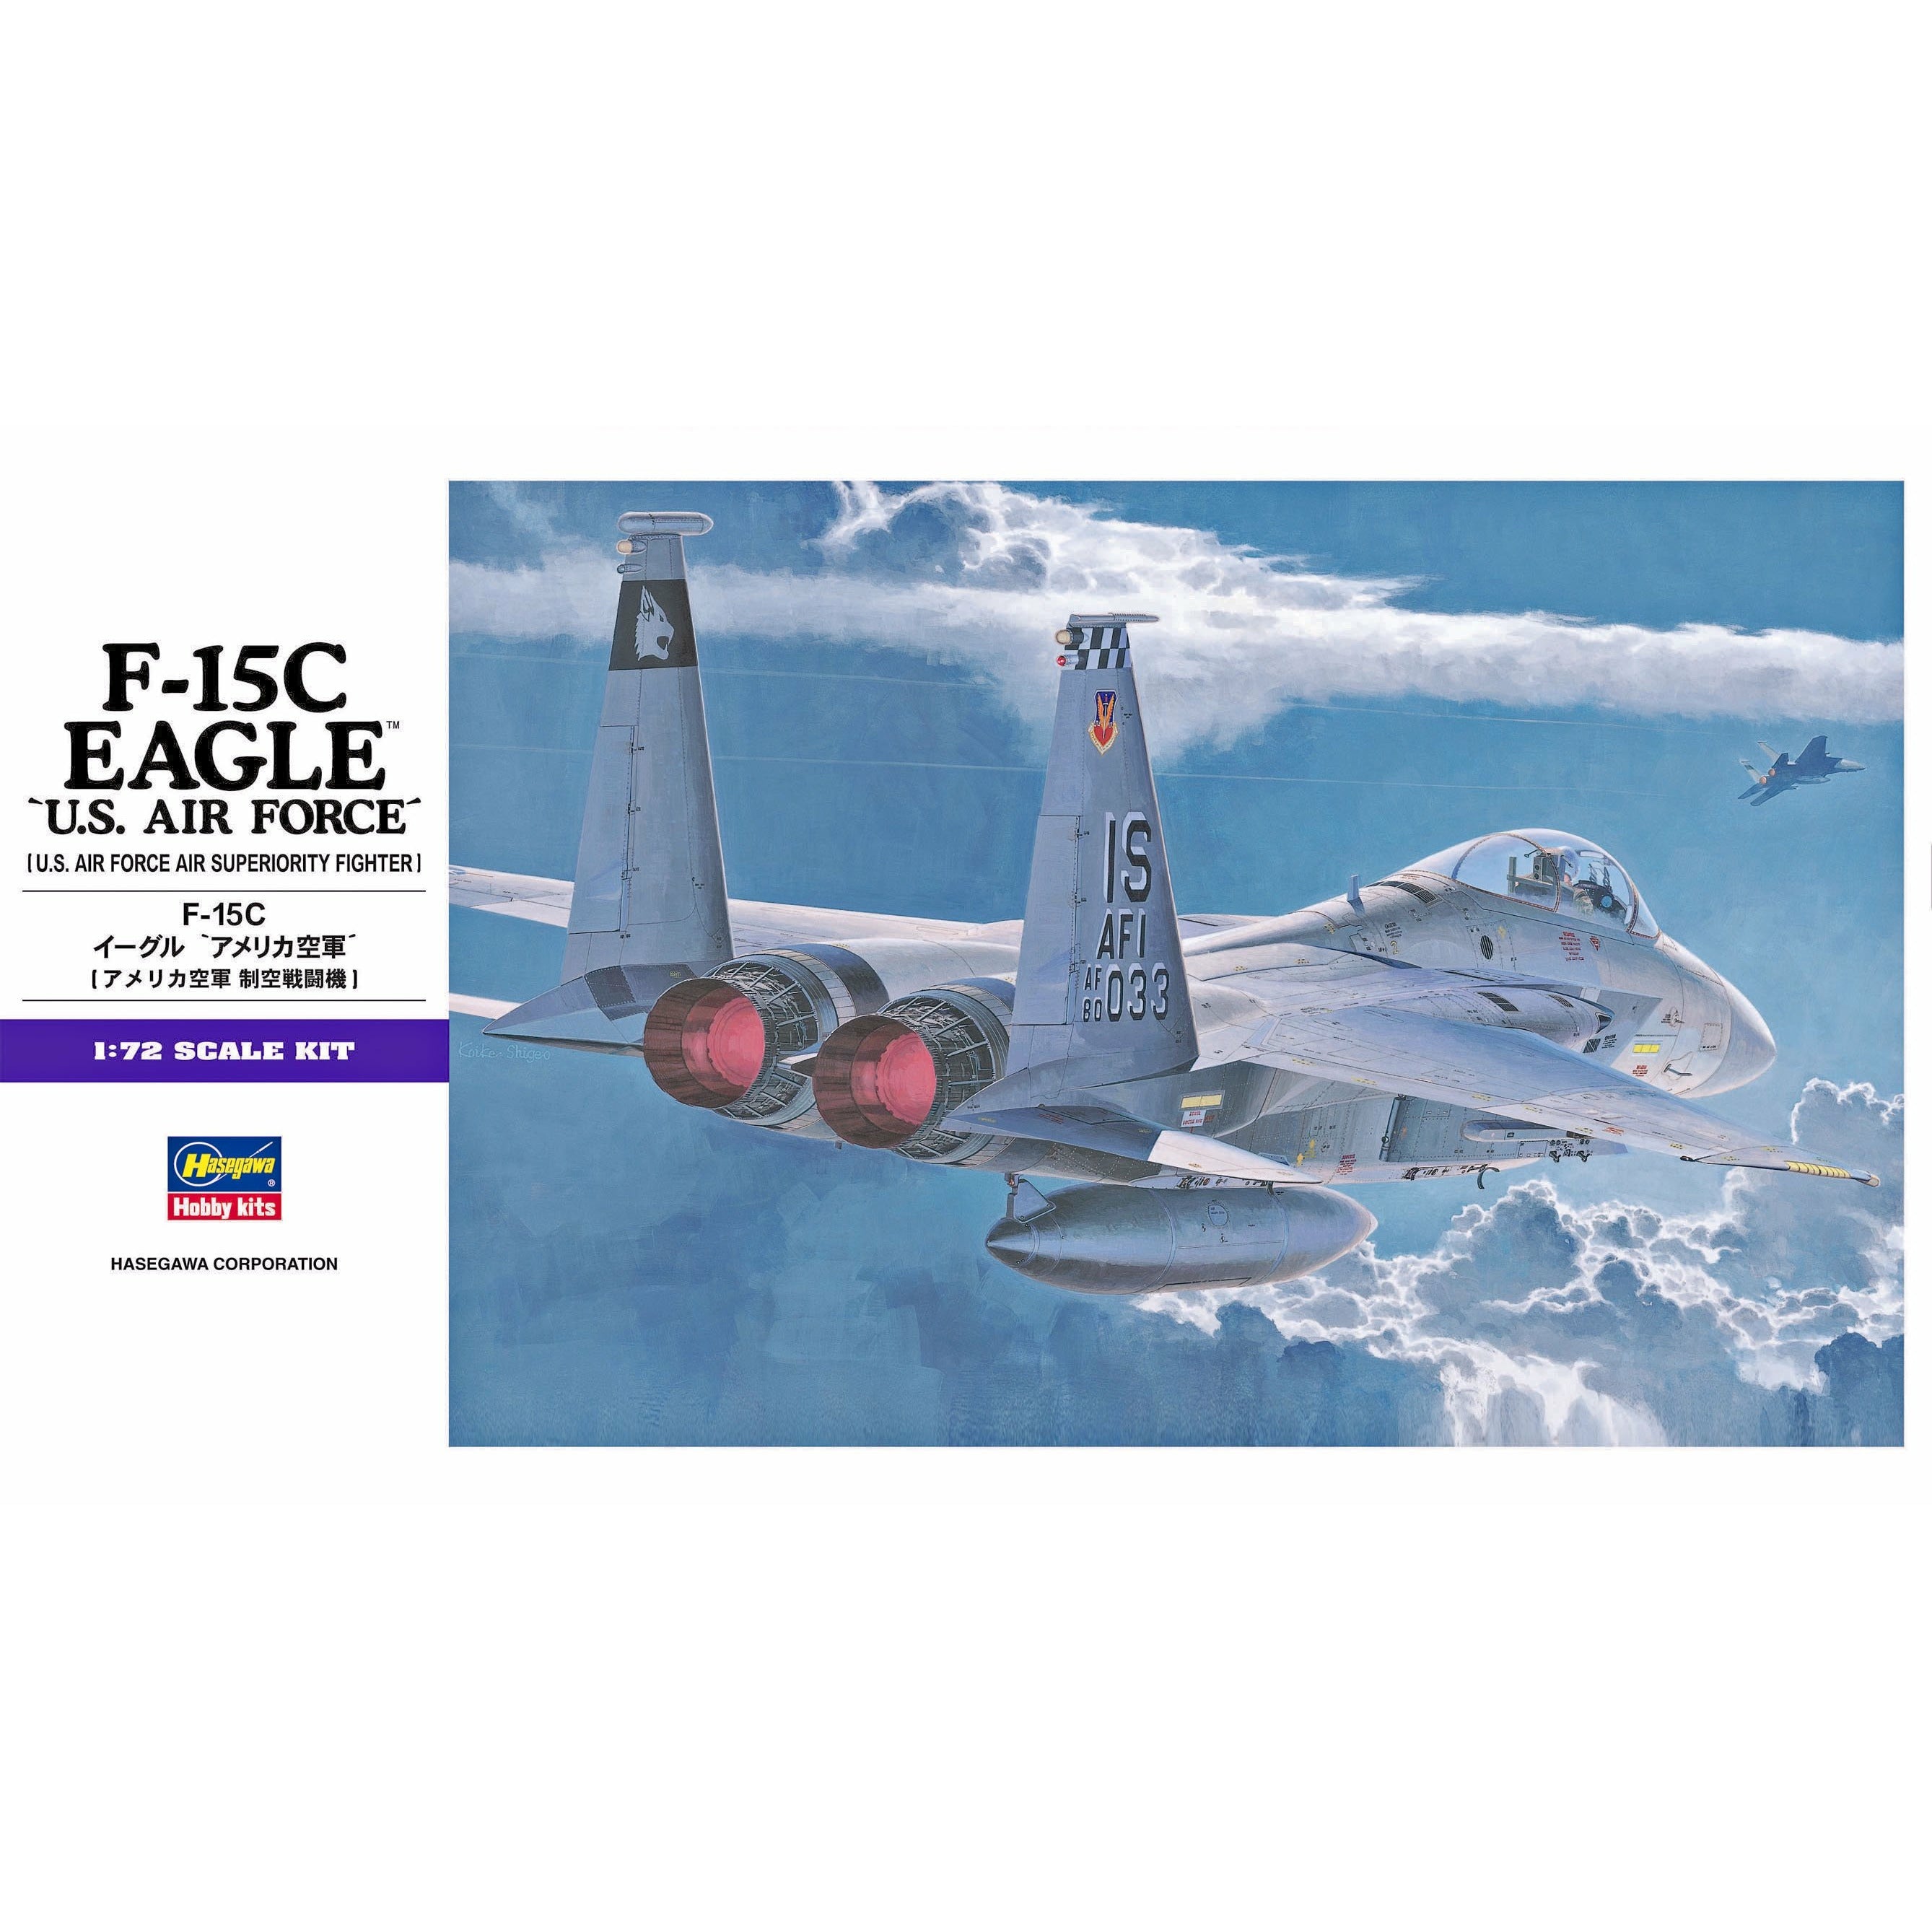 F-15C Eagle 'U. S. A. F. ' 1/72 #00543 by Hasegawa